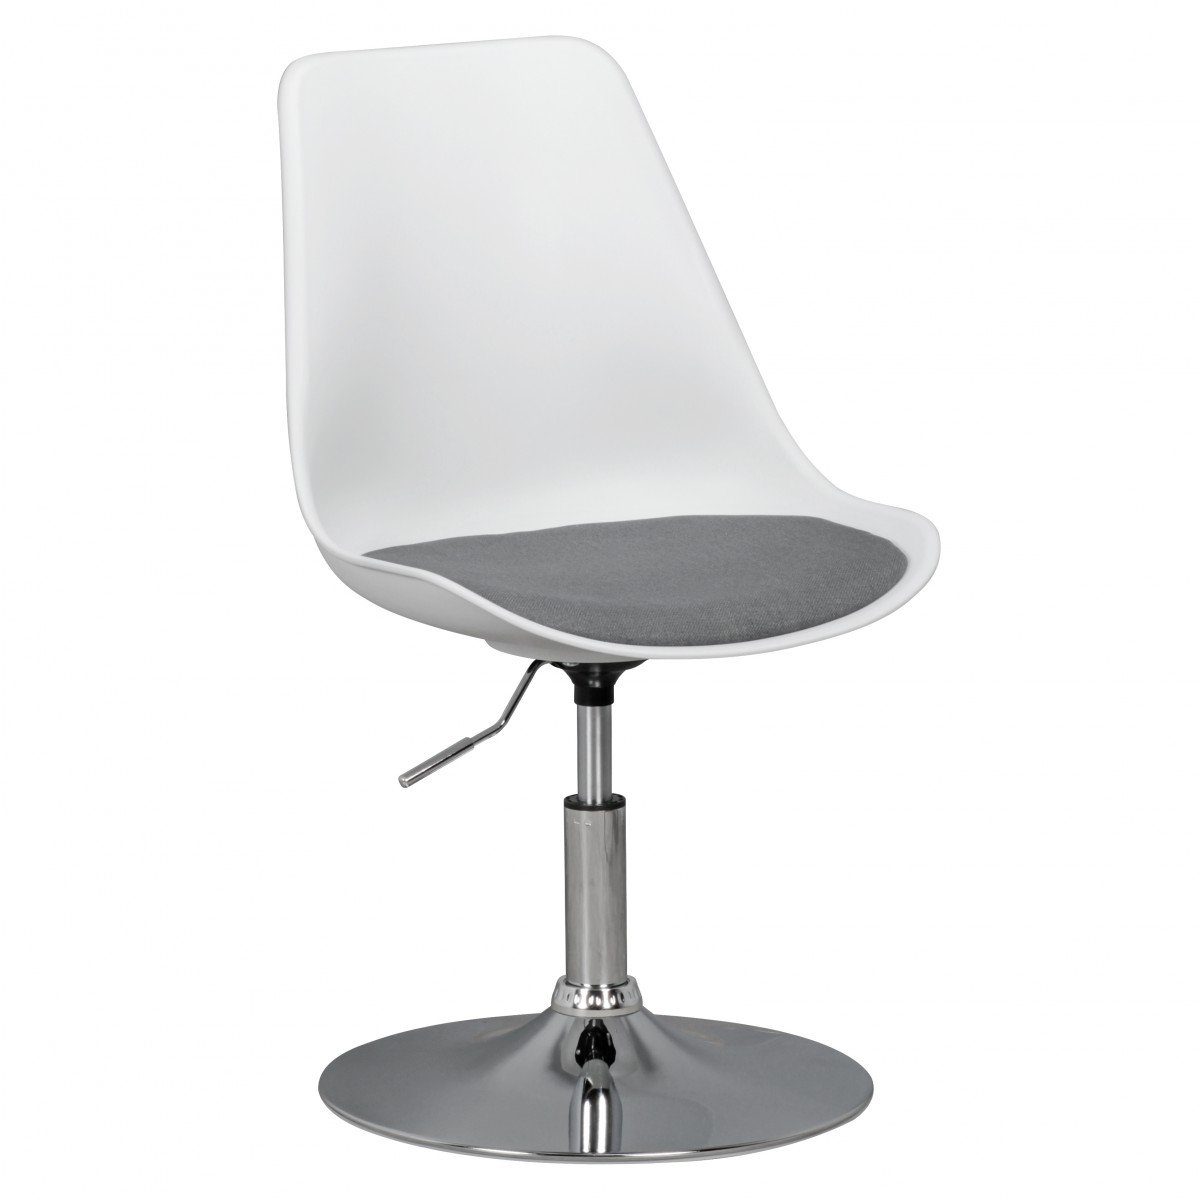 KADIMA DESIGN Besucherstuhl Trompetenstuhl mit Kunstlederbezug - Bequemer Büro-Stuhl